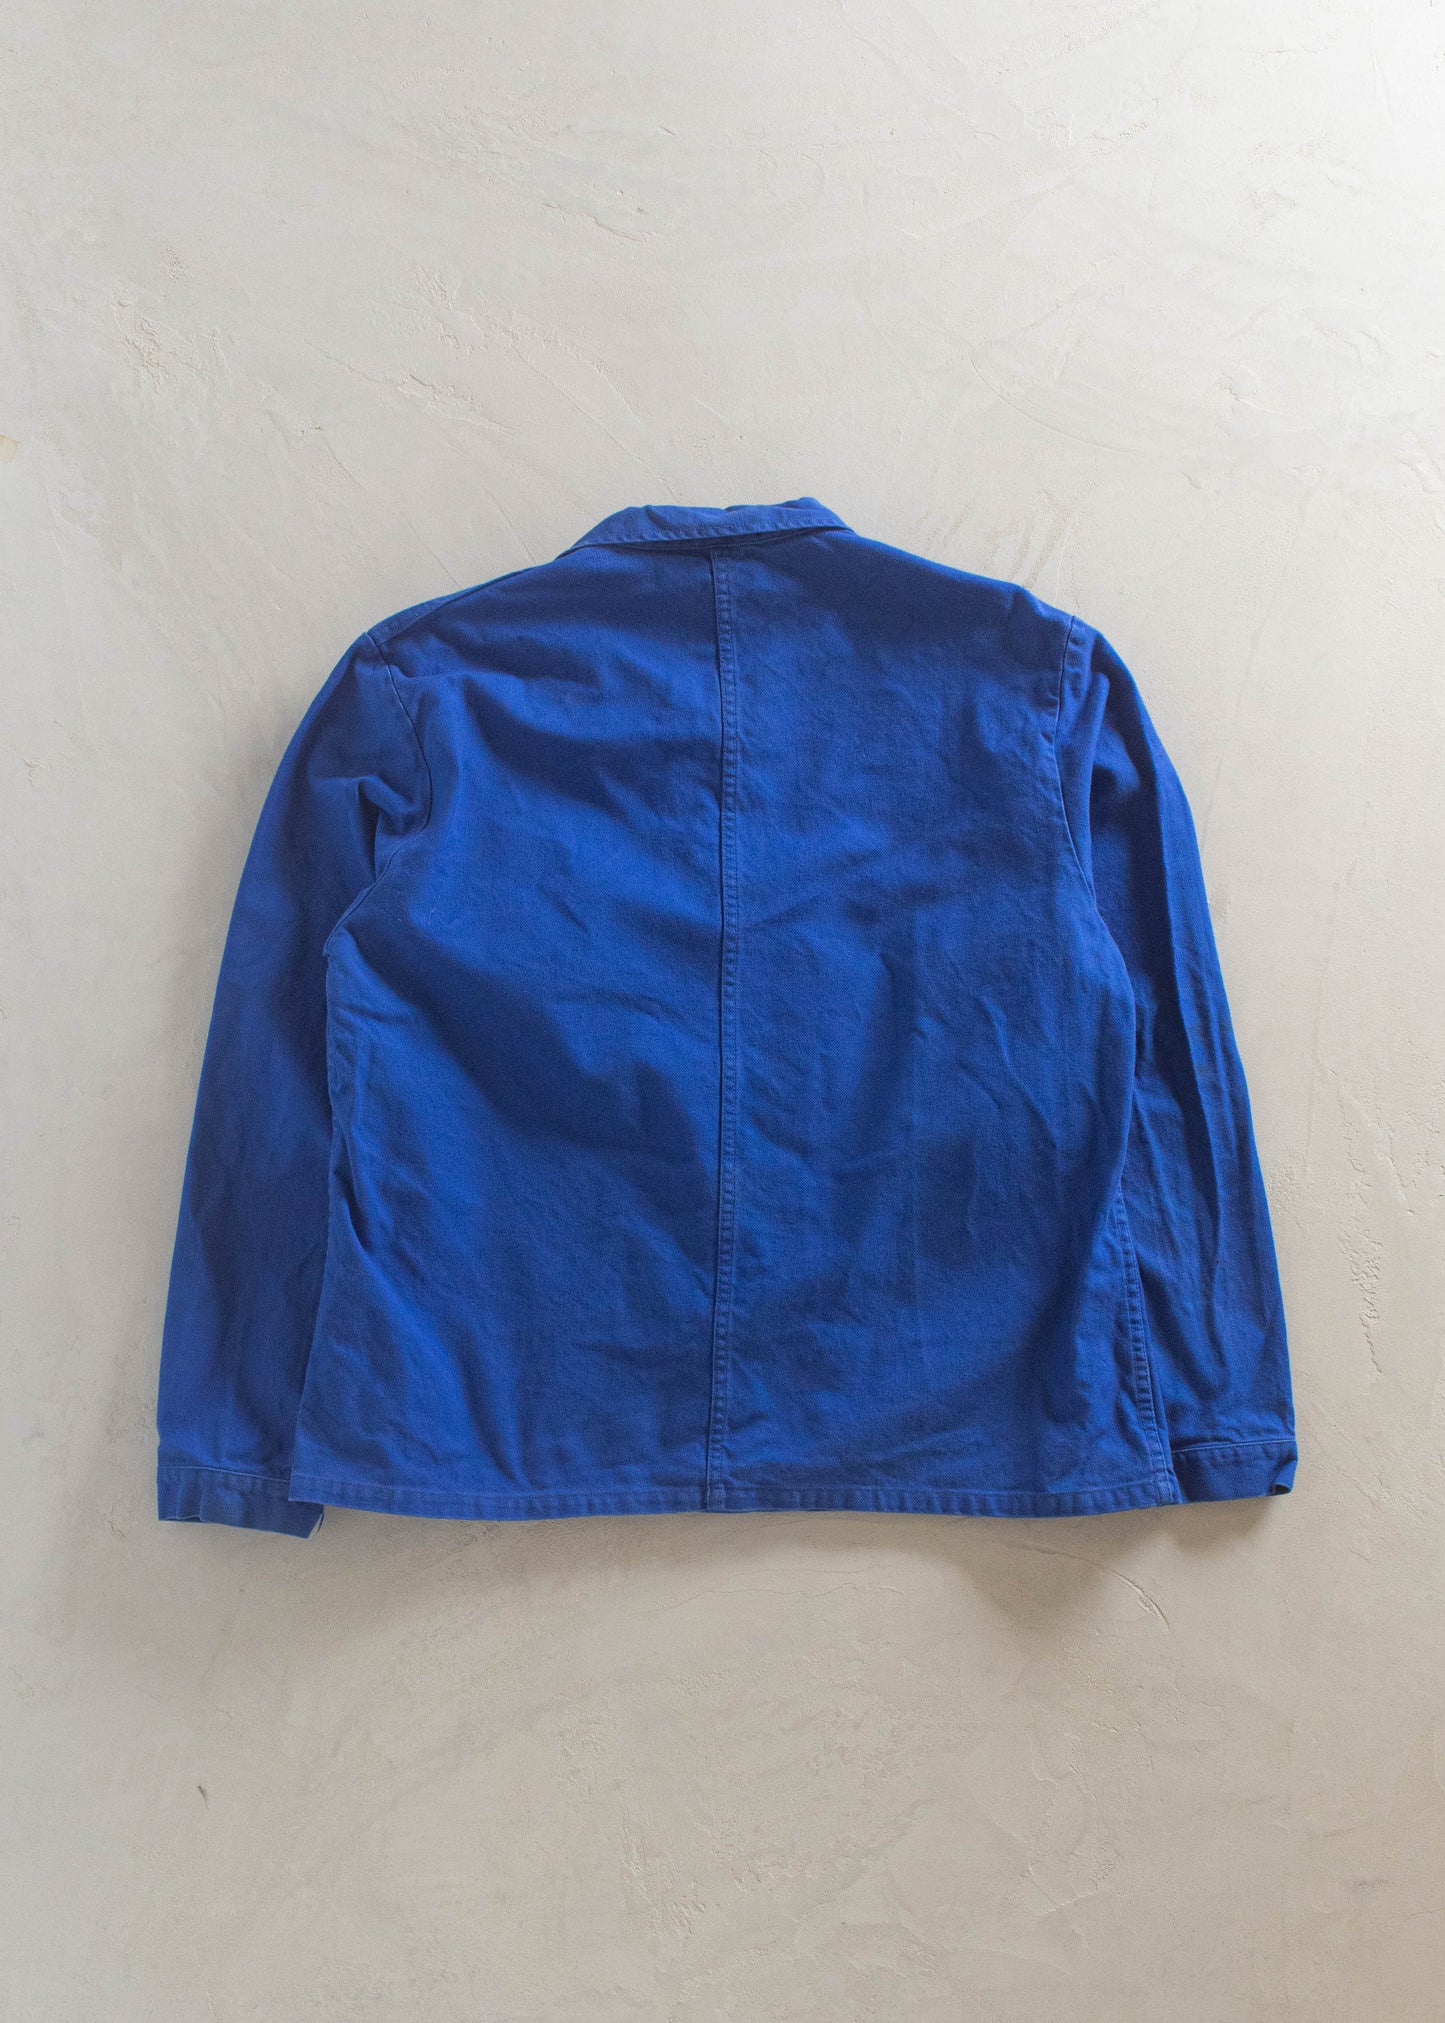 1980s Molinel French Workwear Chore Jacket Size L/XL